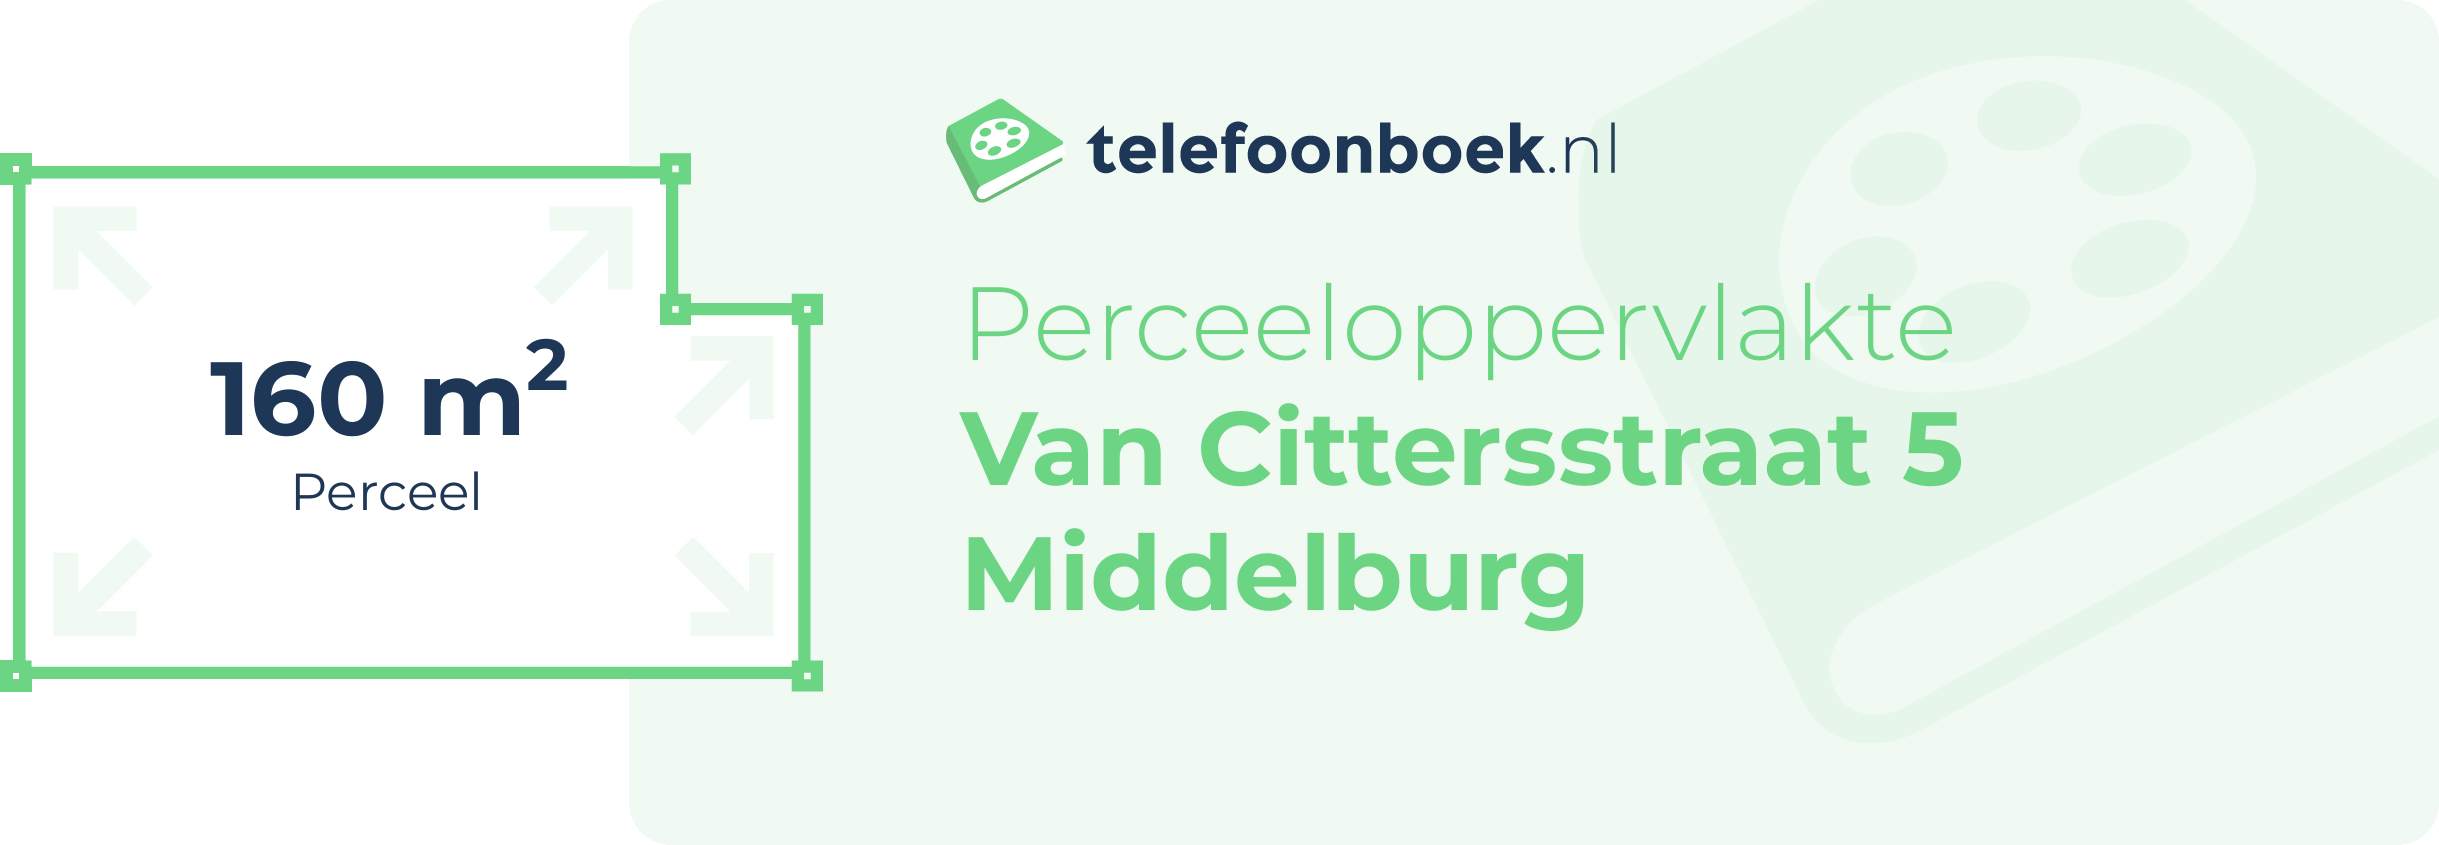 Perceeloppervlakte Van Cittersstraat 5 Middelburg